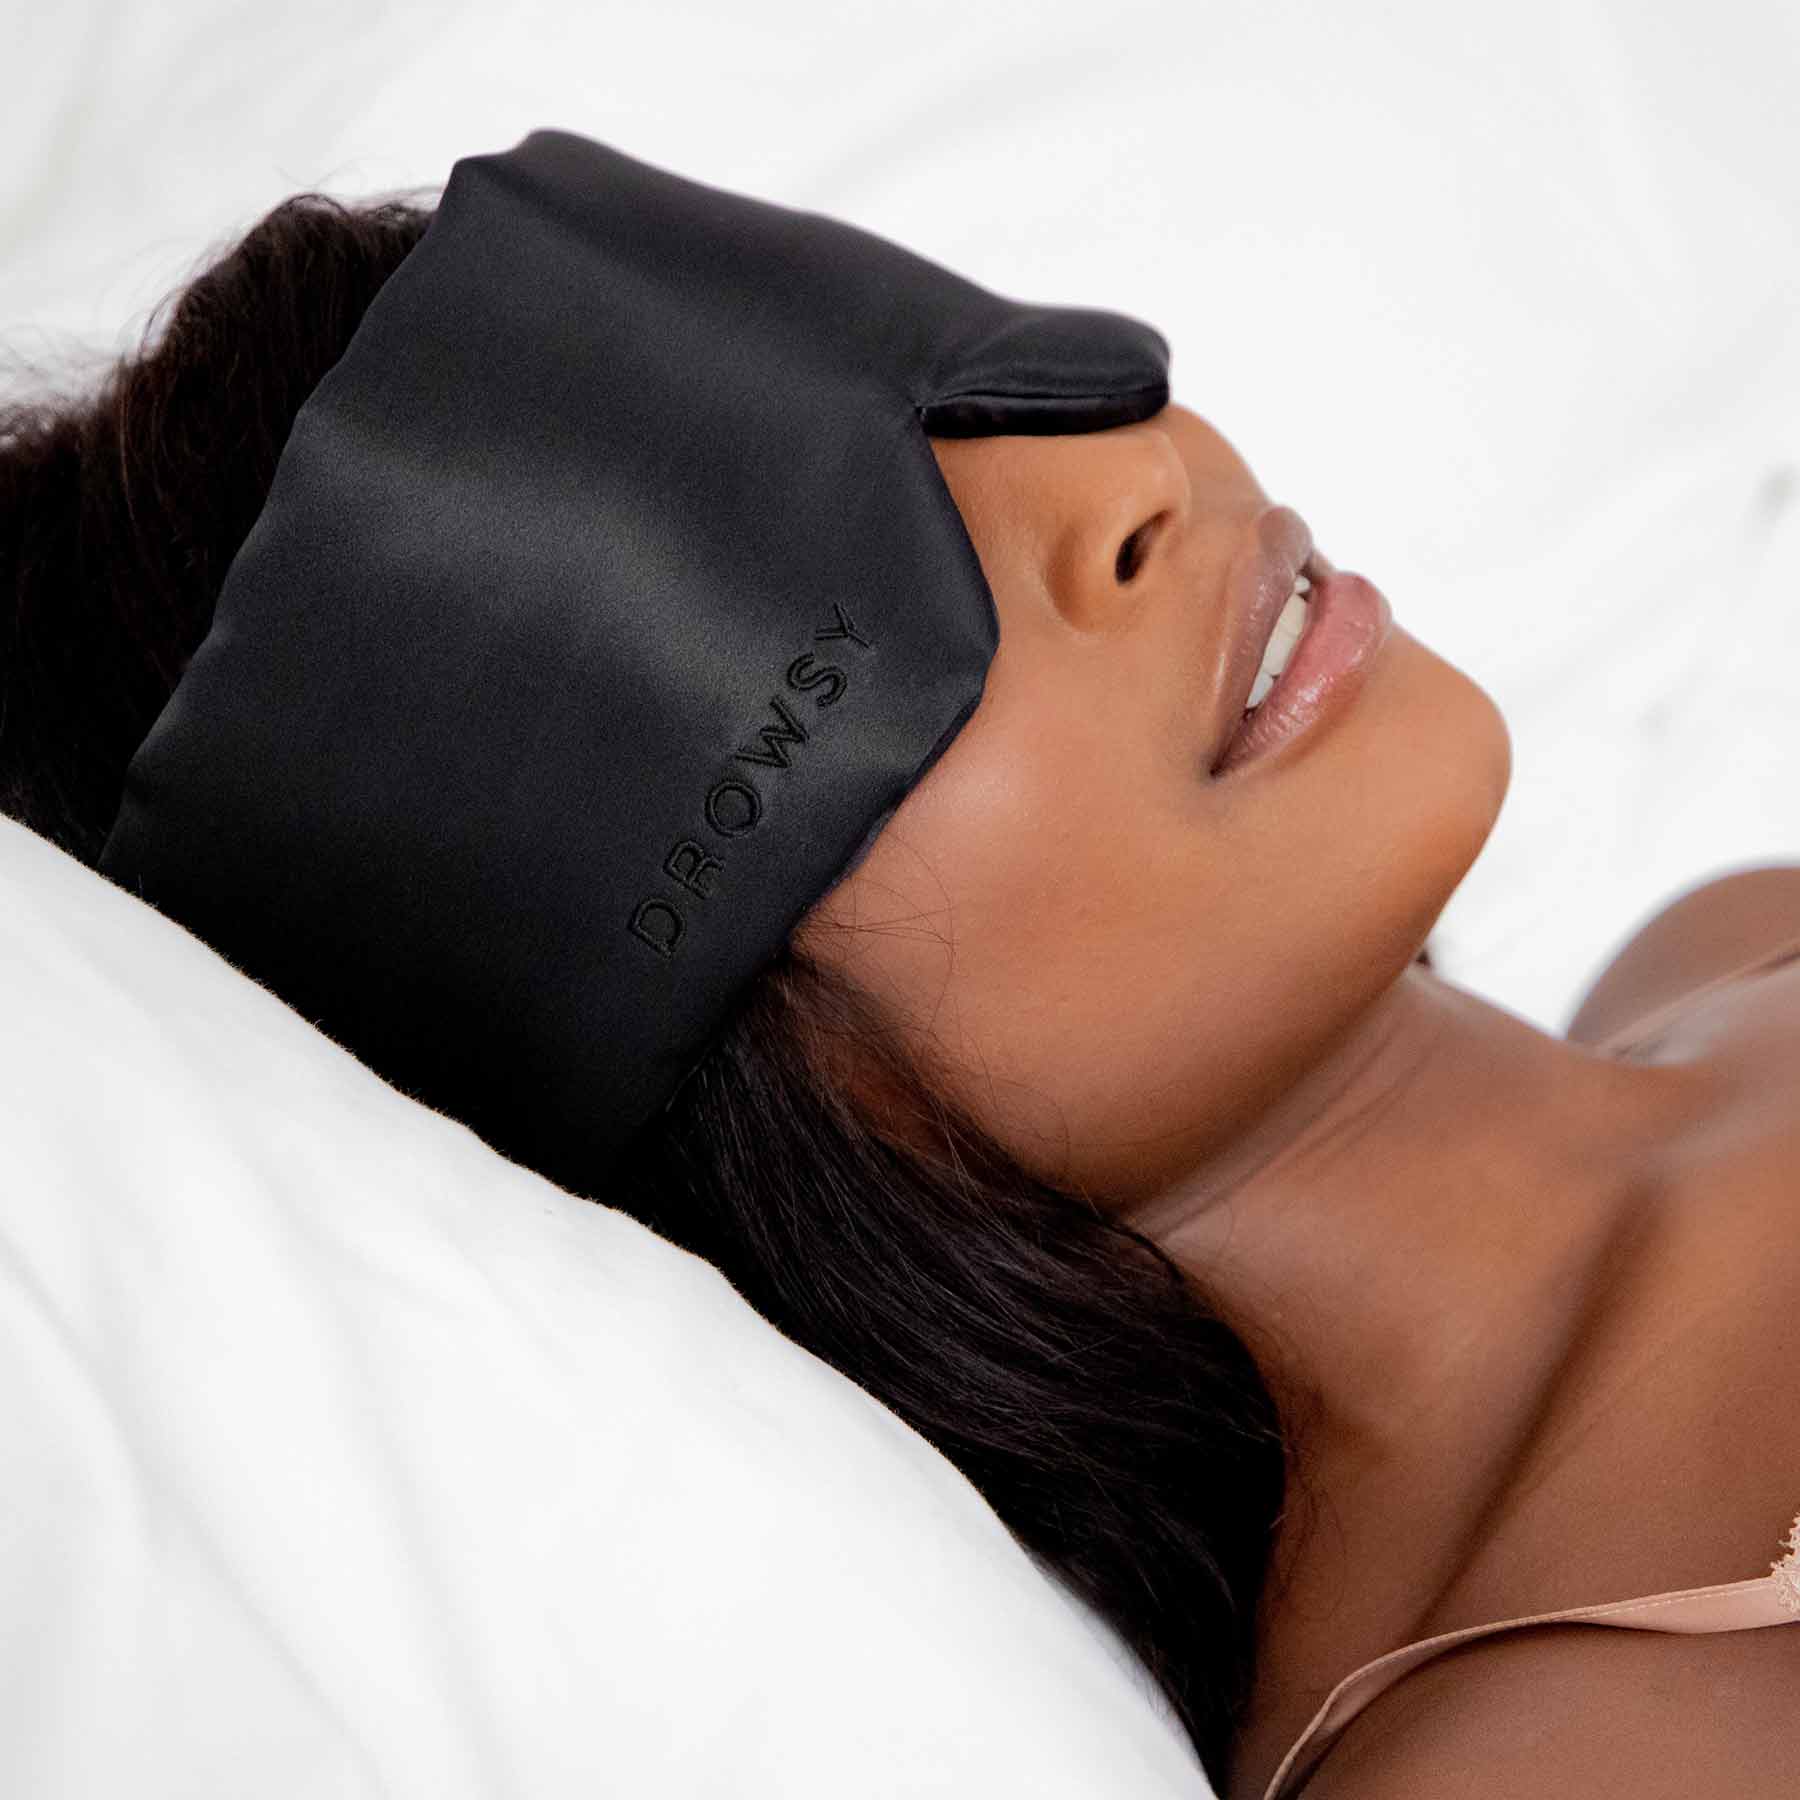 Model sleeping in bed with Drowsy Sleep Co. Black Jade mask covering her eyes